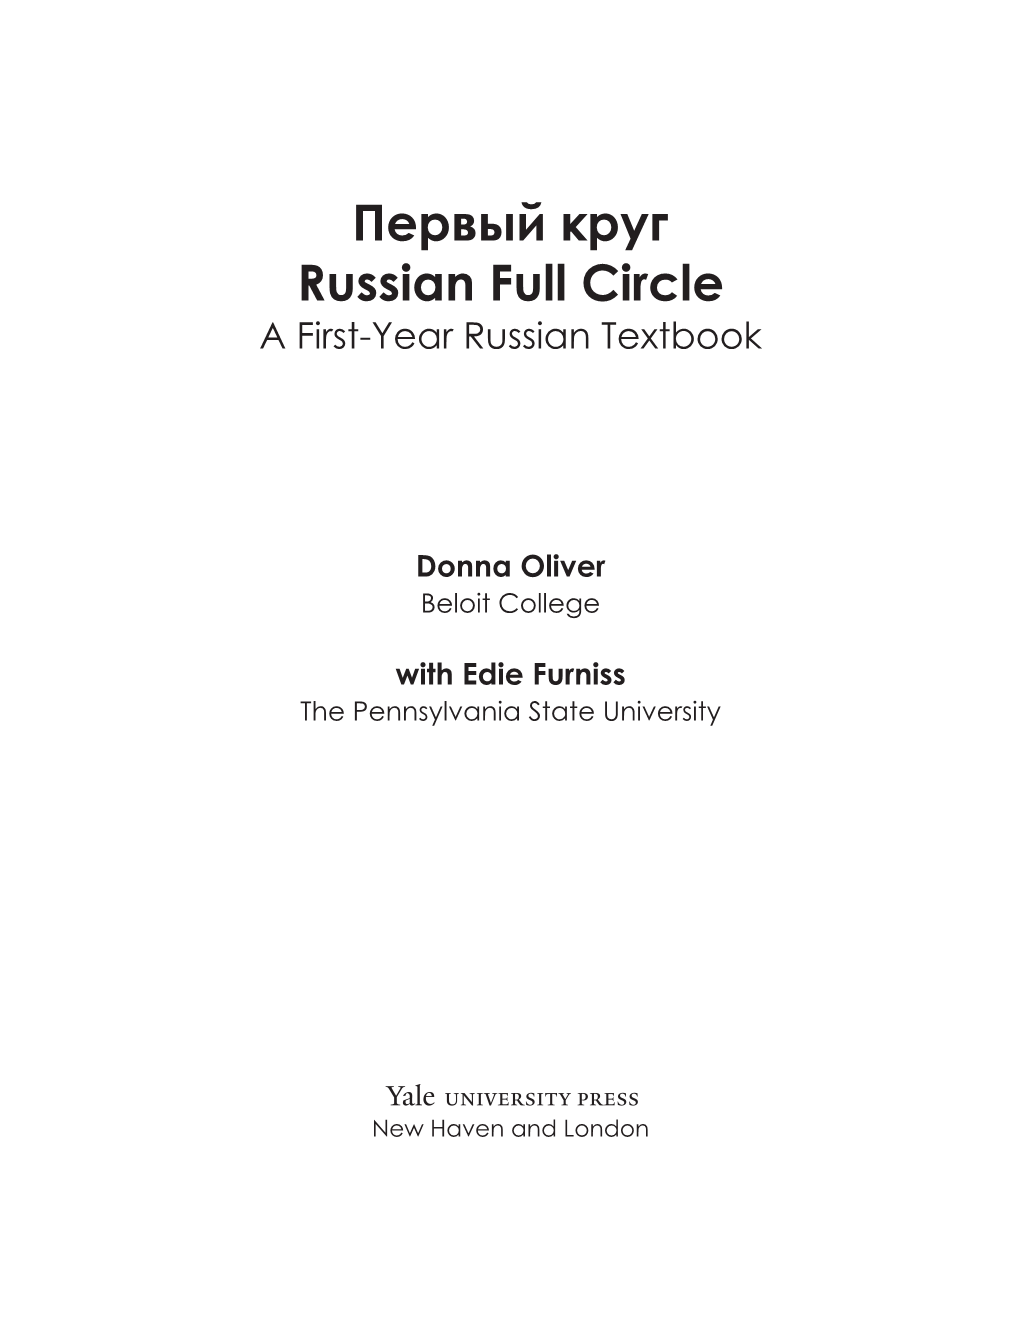 Первый Круг Russian Full Circle a First-Year Russian Textbook